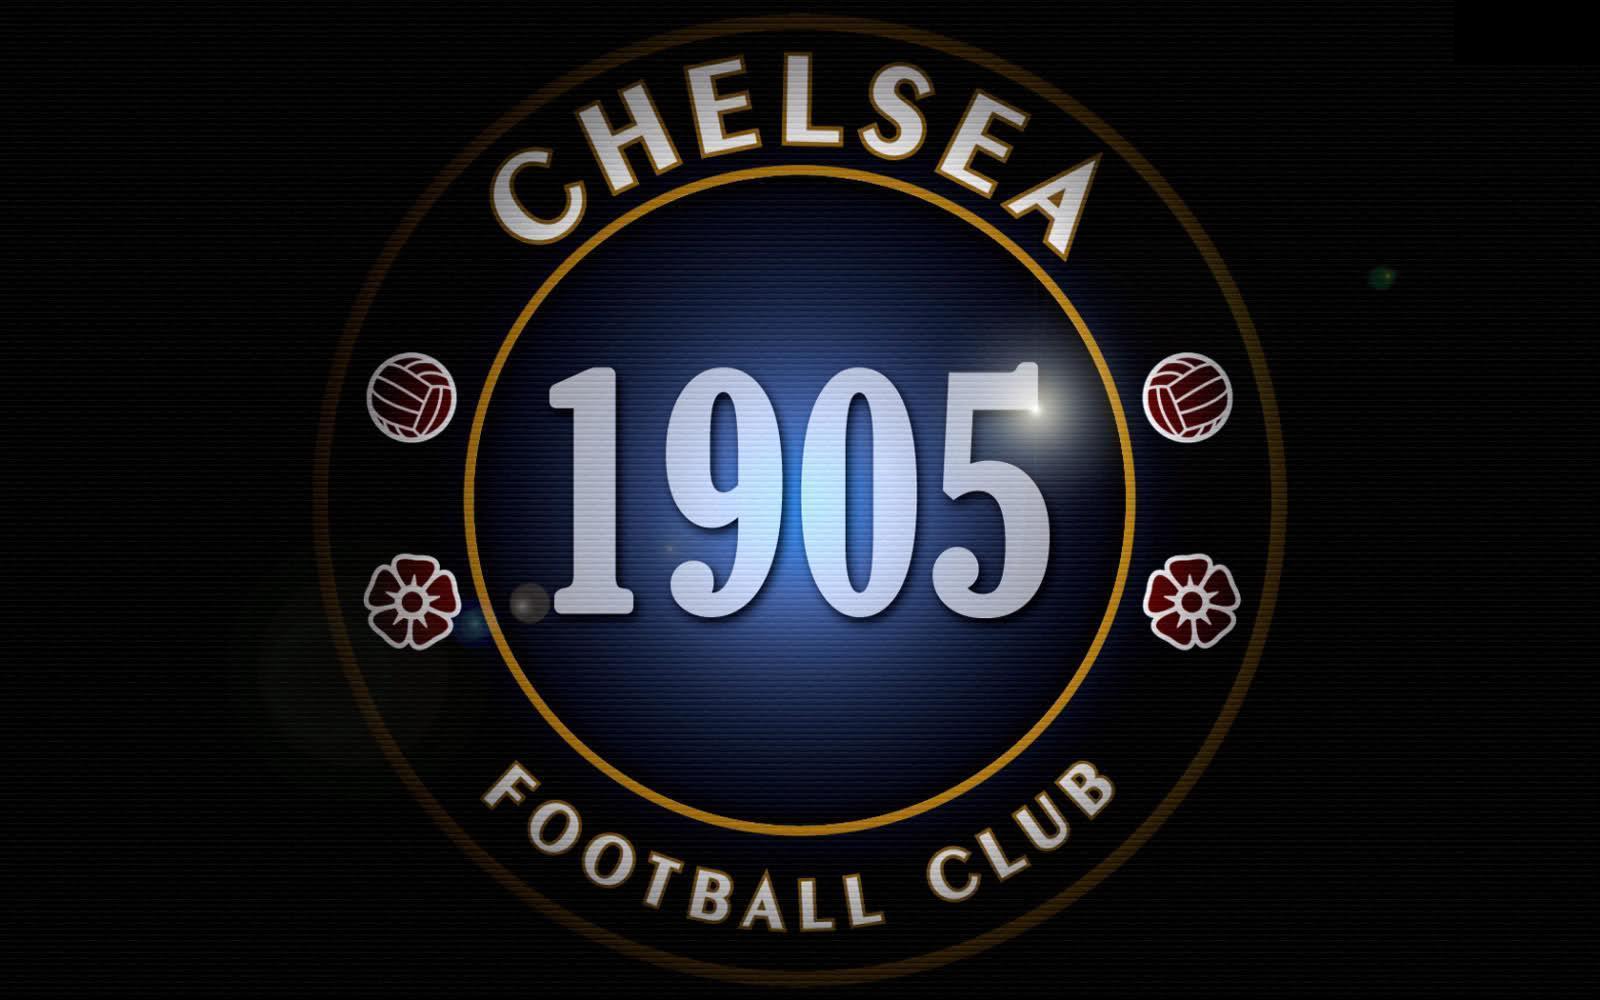 Chelsea Logo 1905. High Definition Wallpaper, High Definition